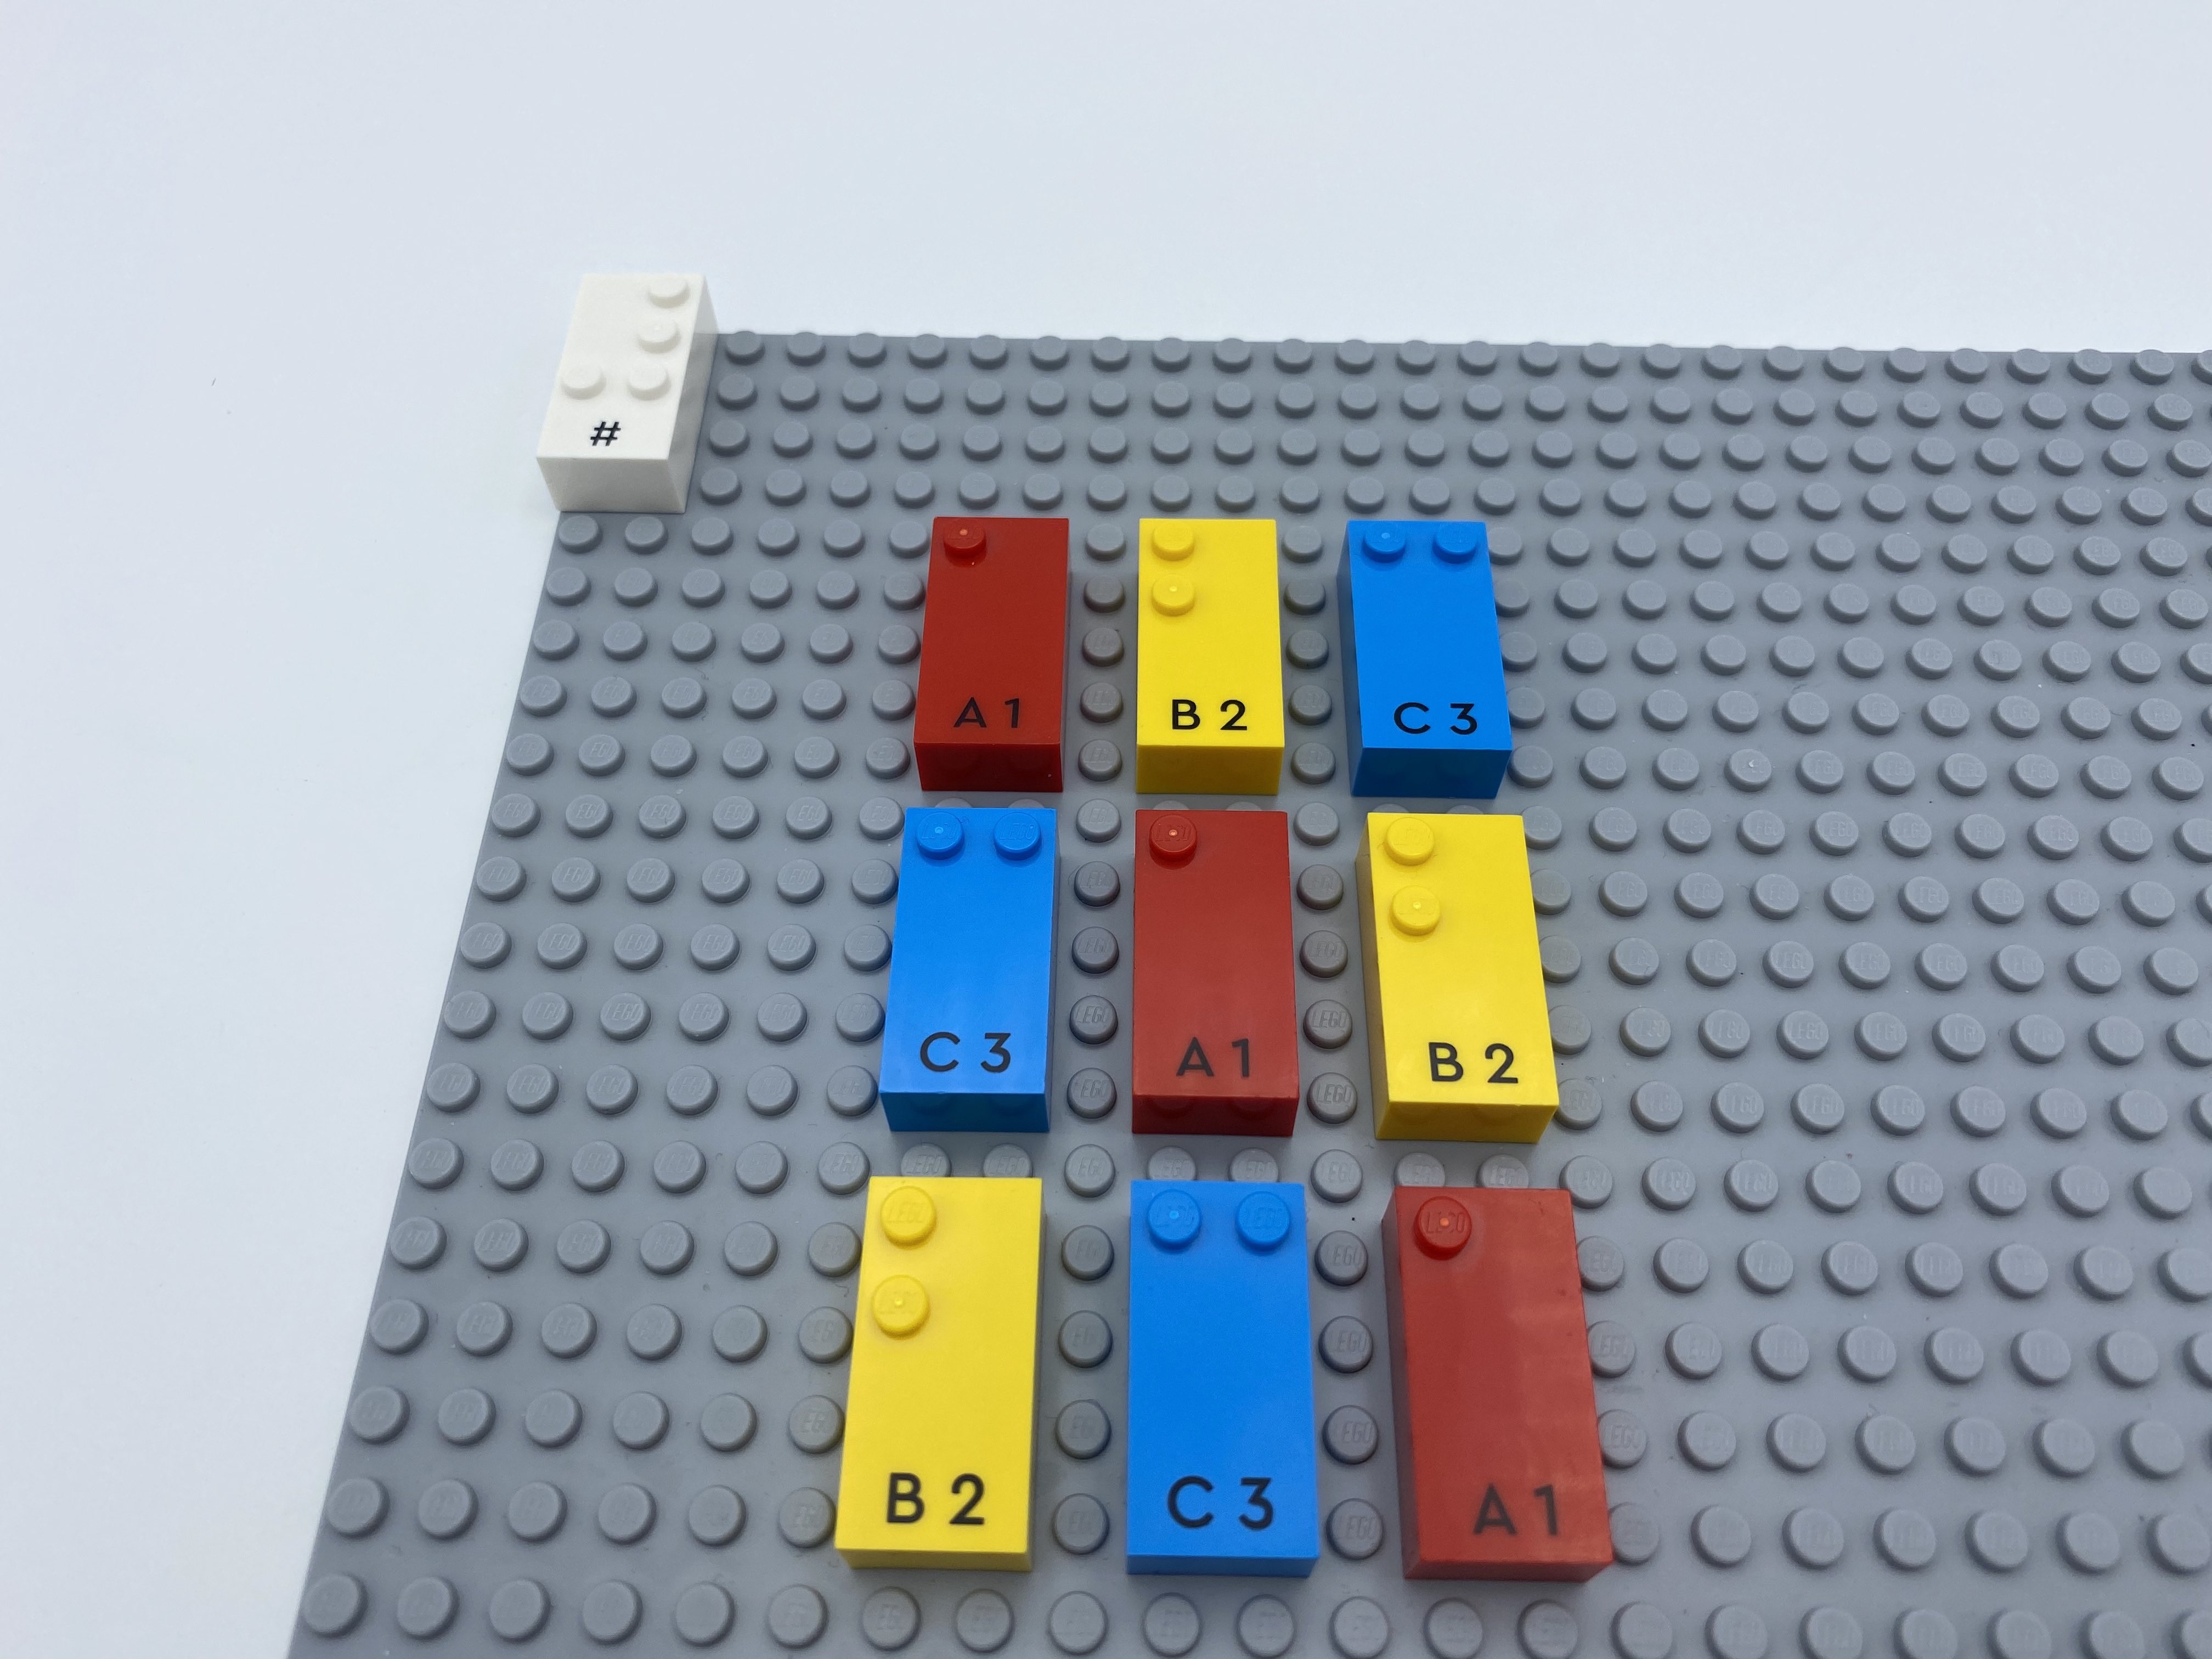 1st row of number bricks: 1, 2, 3
2nd row: 3, 1, 2
3rd row: 2, 3, 1 